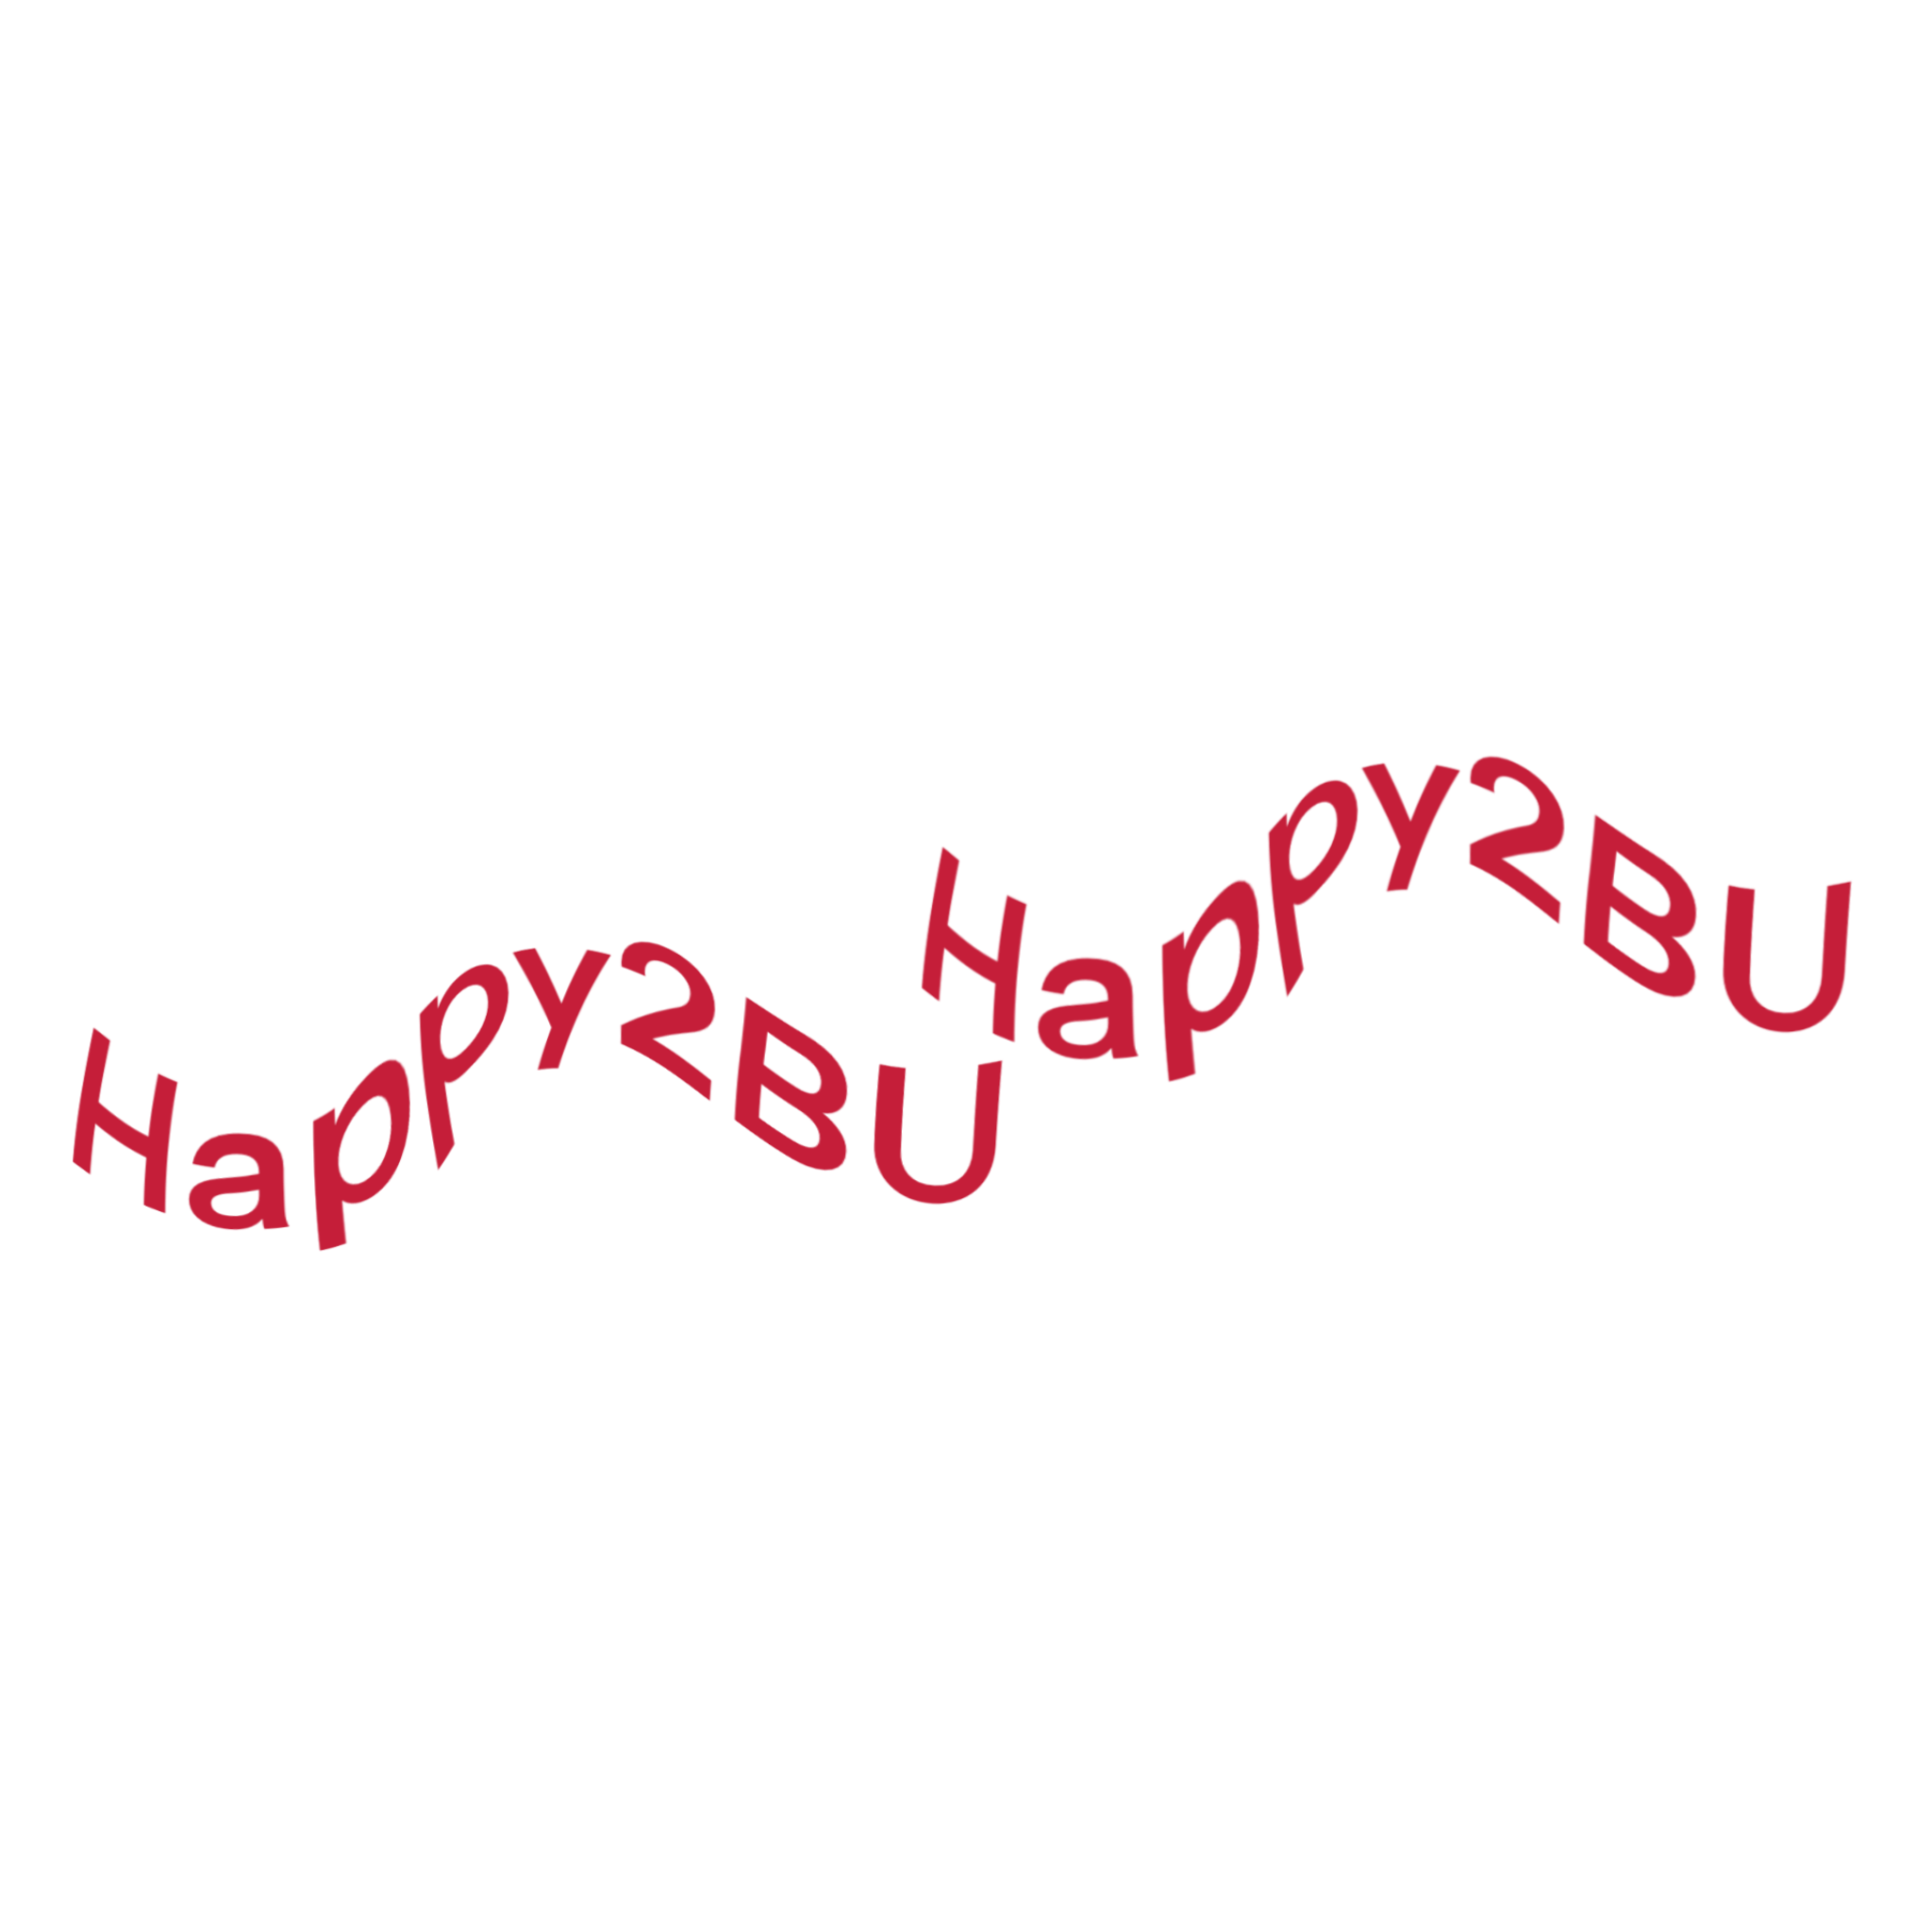 say Happy2BU in curvy text